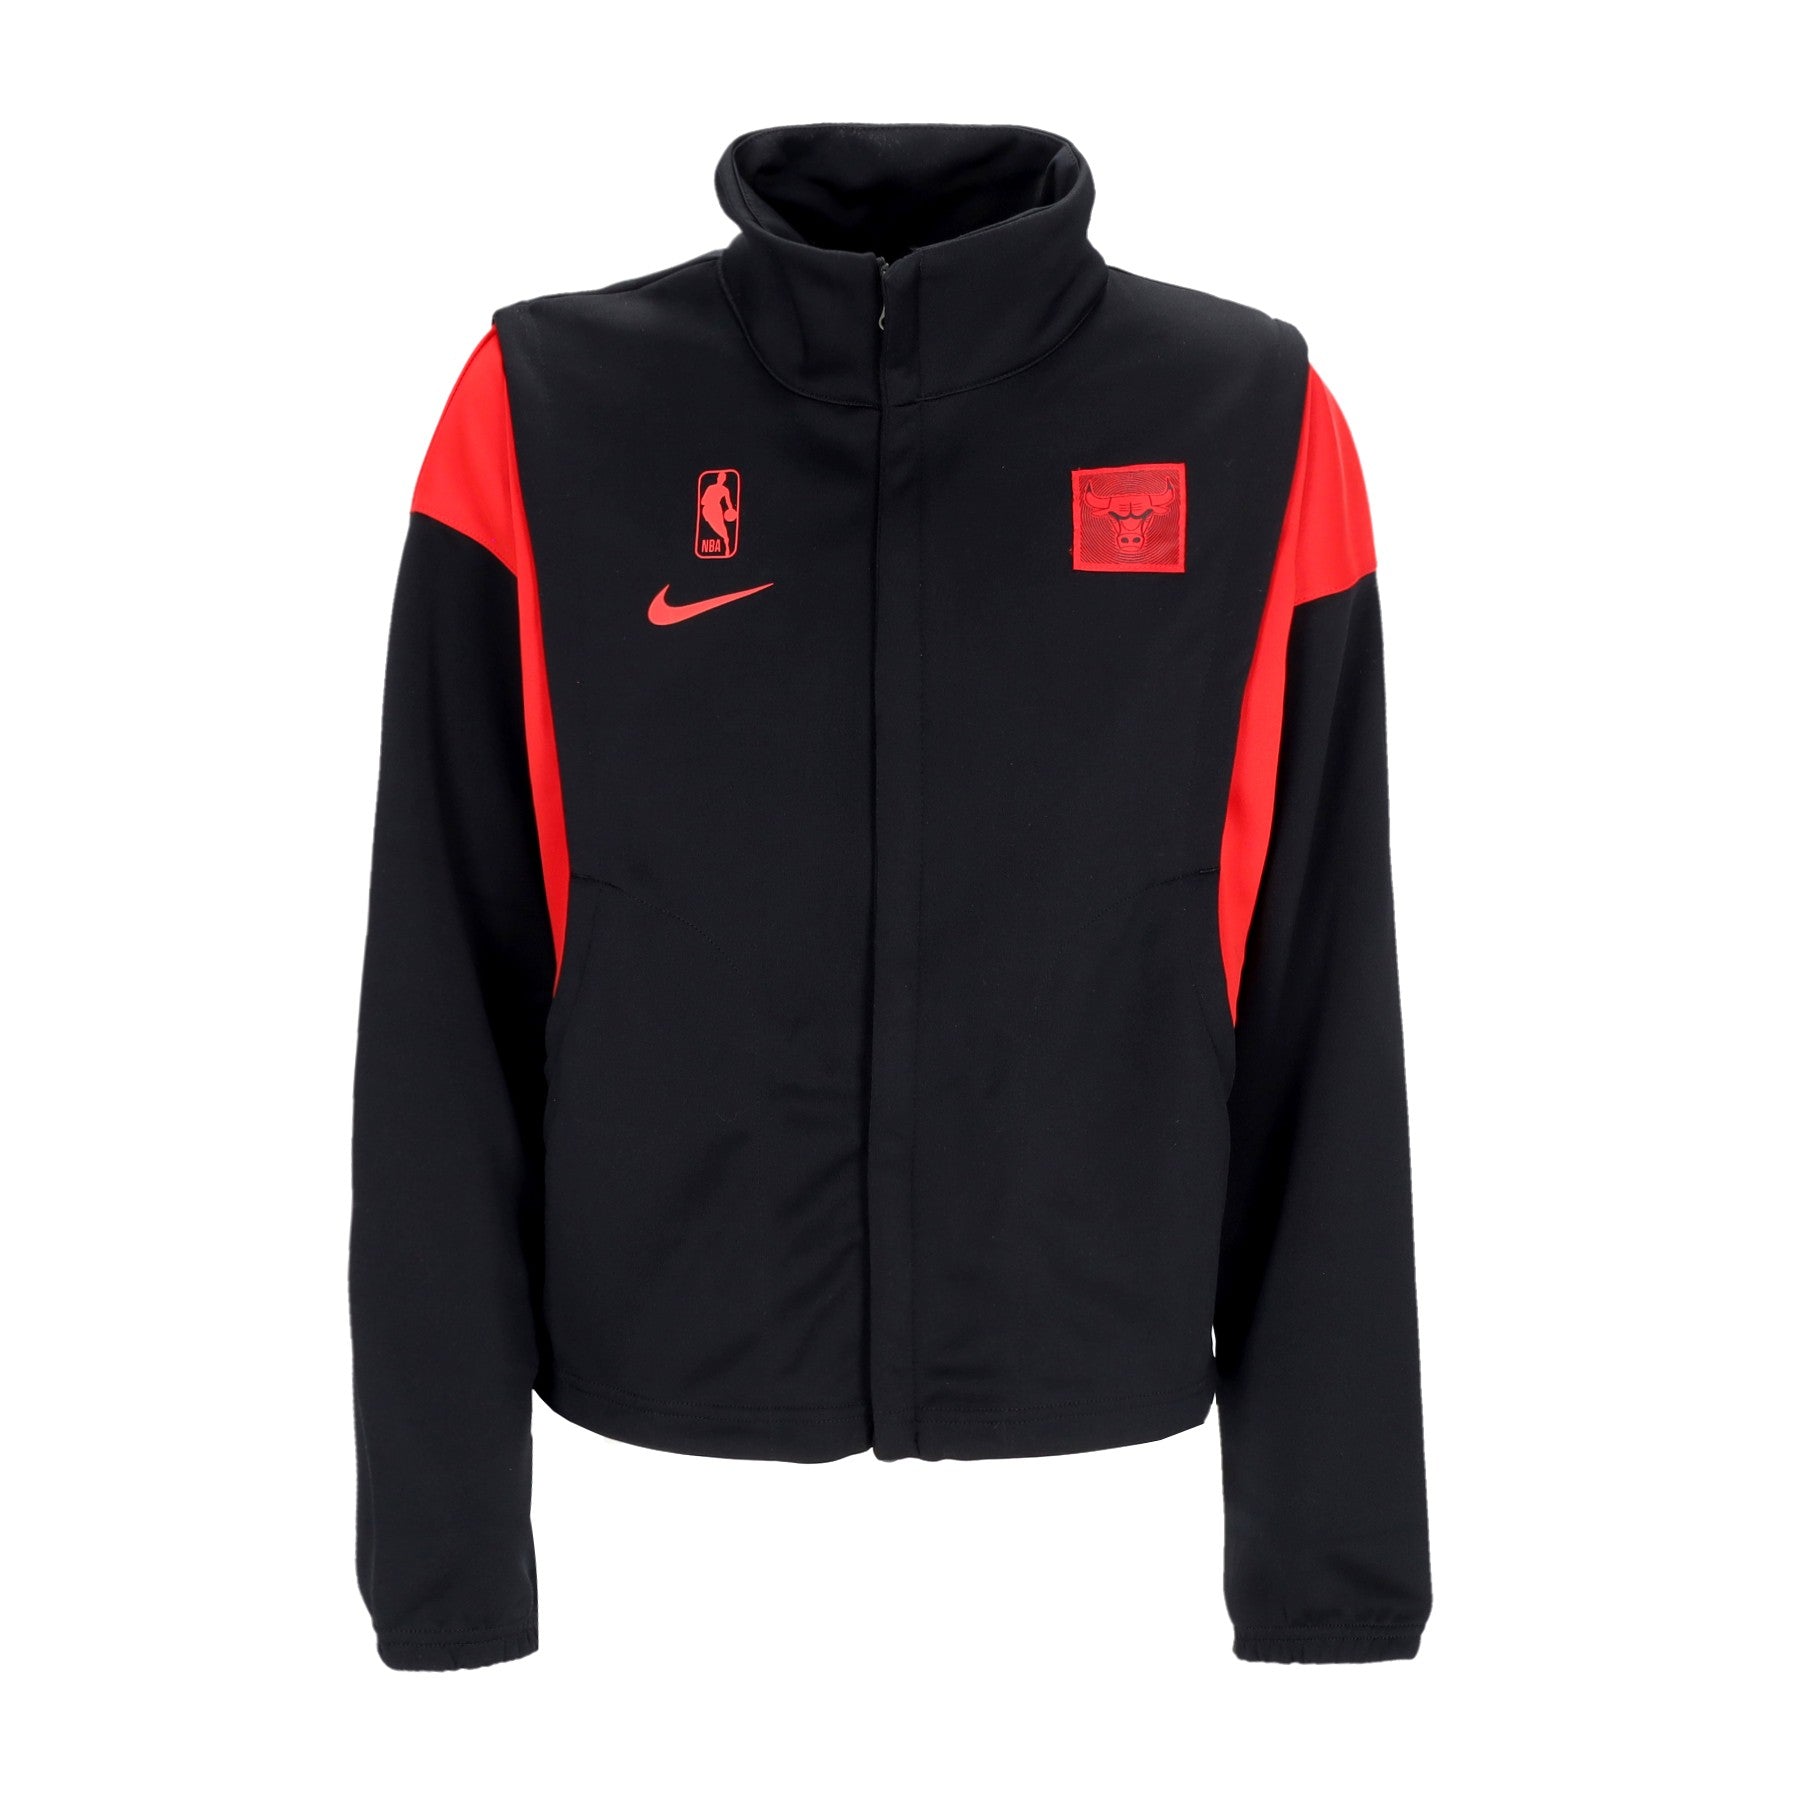 Nike Nba, Giacca Tuta Uomo Nba Dri-fit Retro Fly Jacket Chibul, Black/university Red